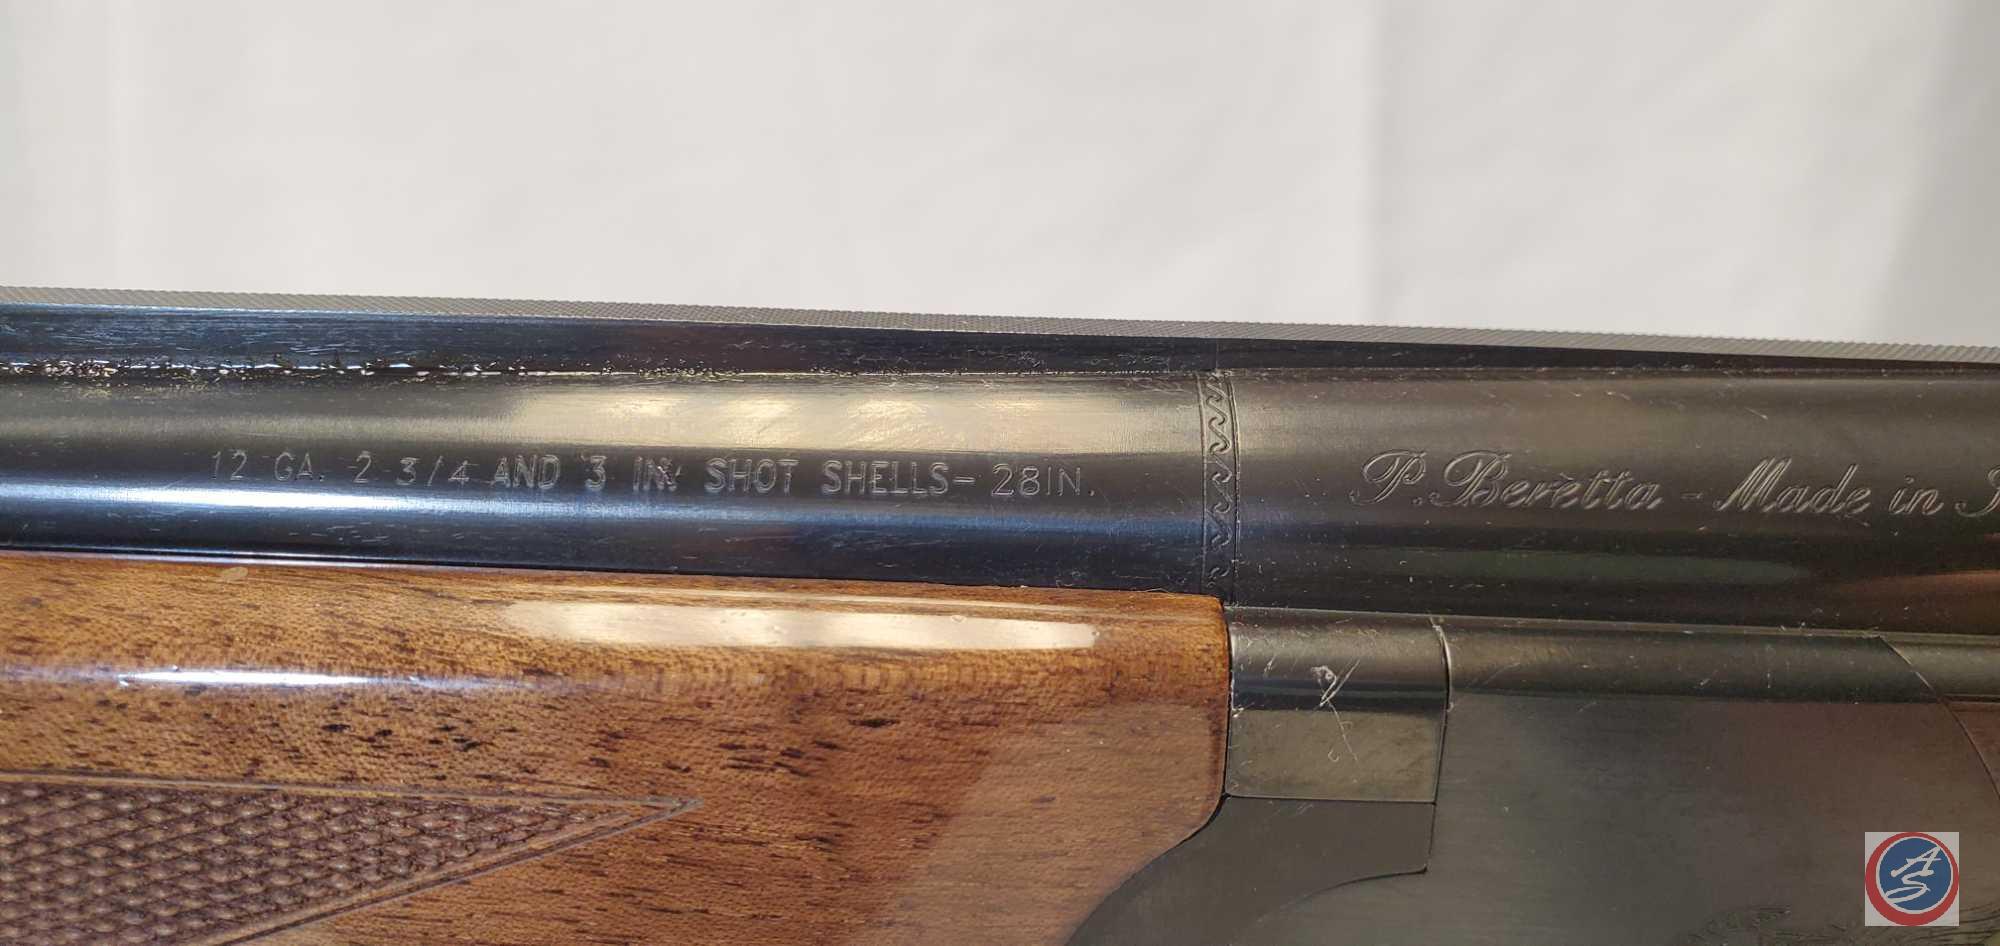 Beretta Model 686XT 12 GA 3" Shotgun Unfired Pheasants Forever Over/Under shotgun with 28 inch